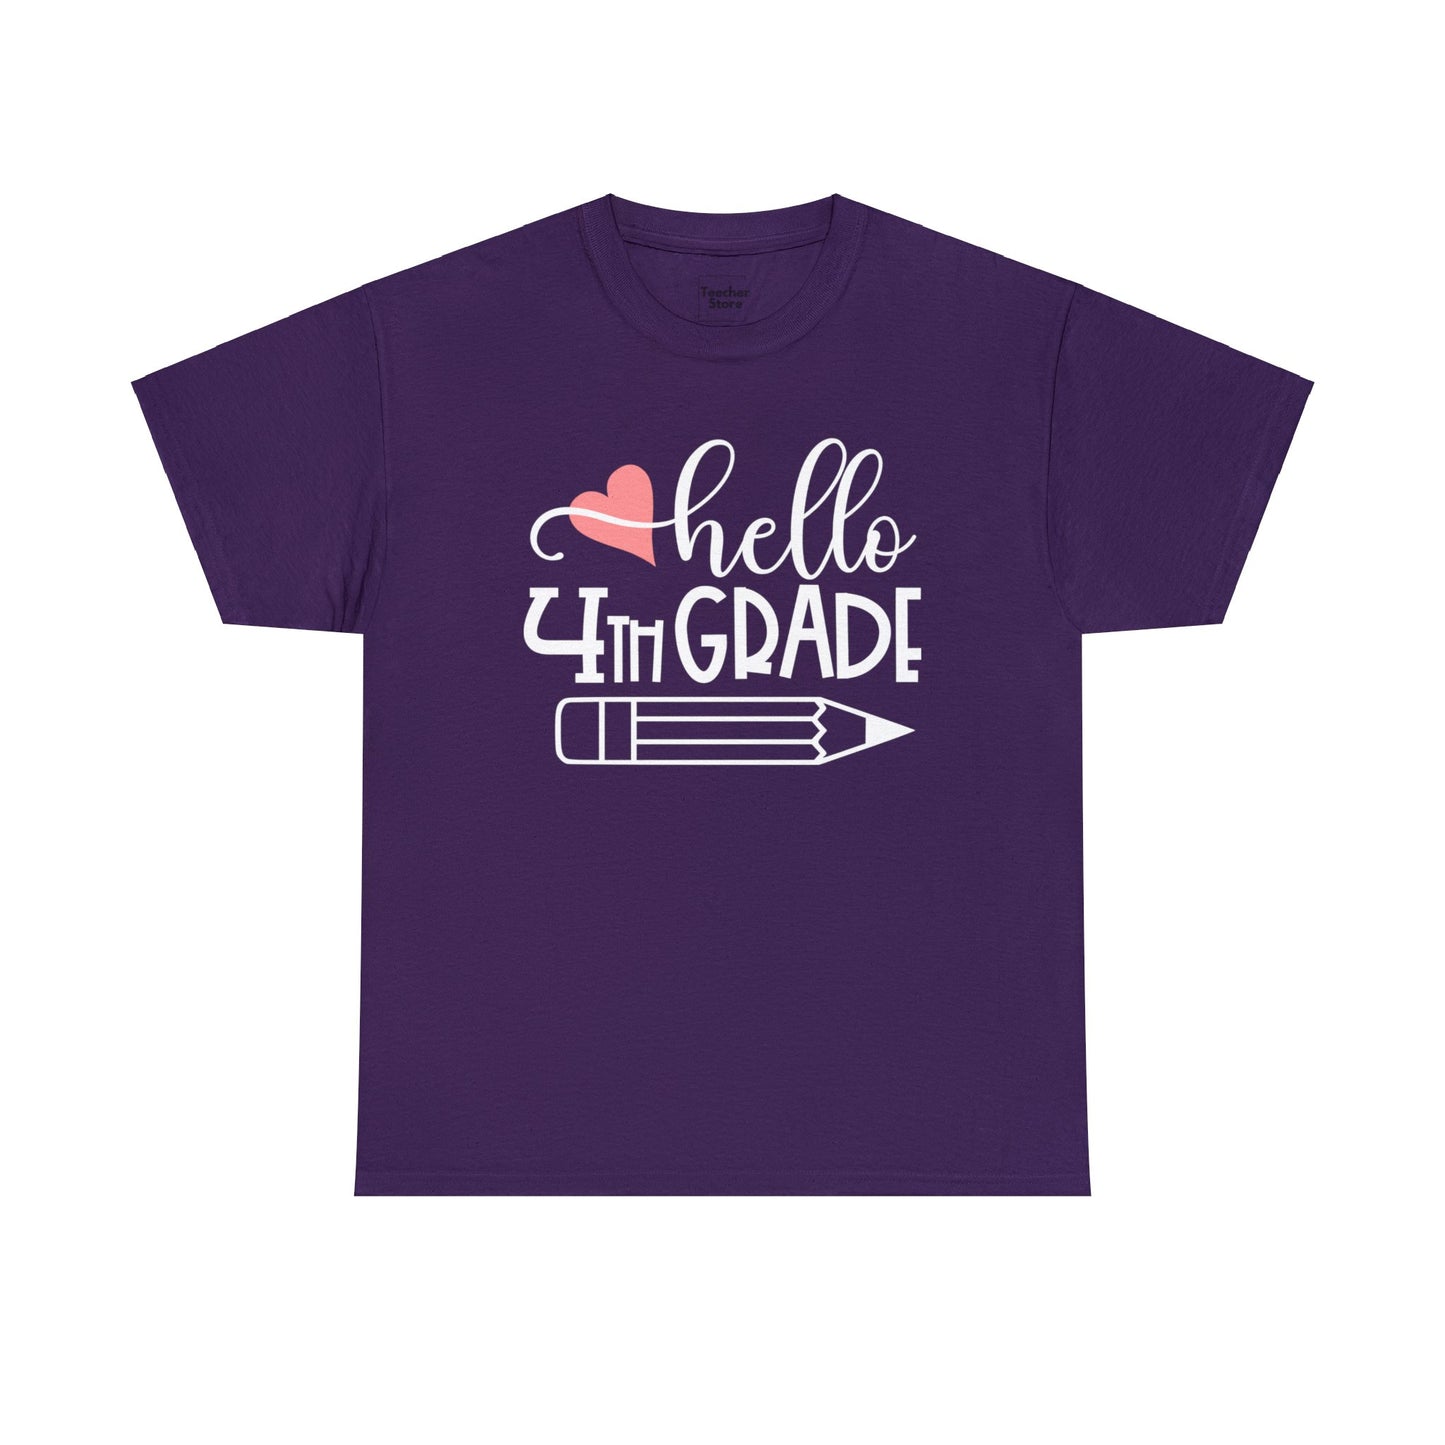 Hello 4th Grade Tee-Shirt